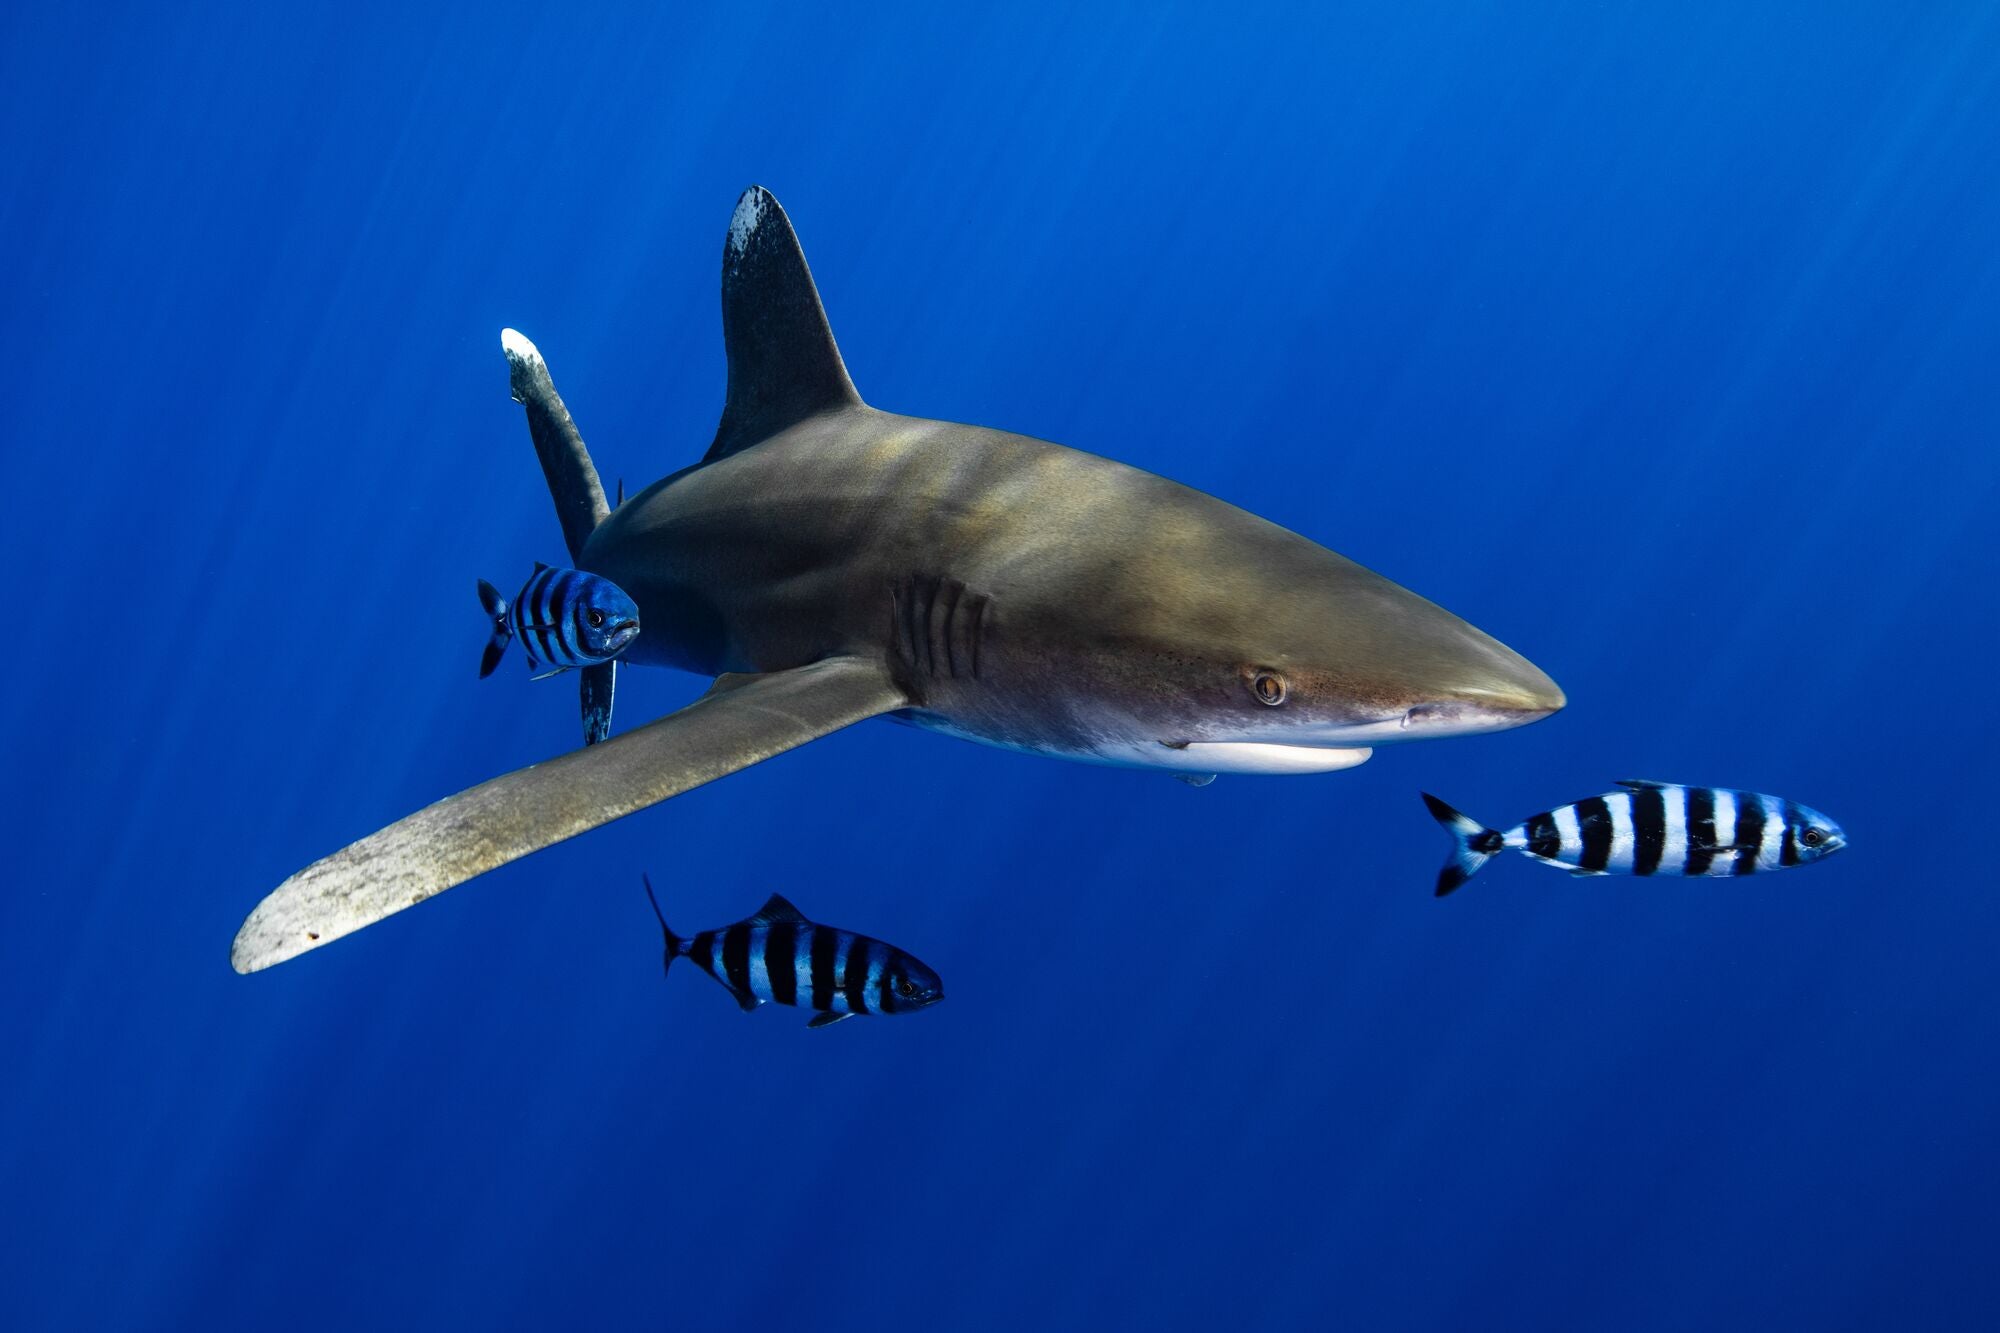 An oceanic whitetip shark, Carcharhinus longimanus, swims in the waters off Hawaii.